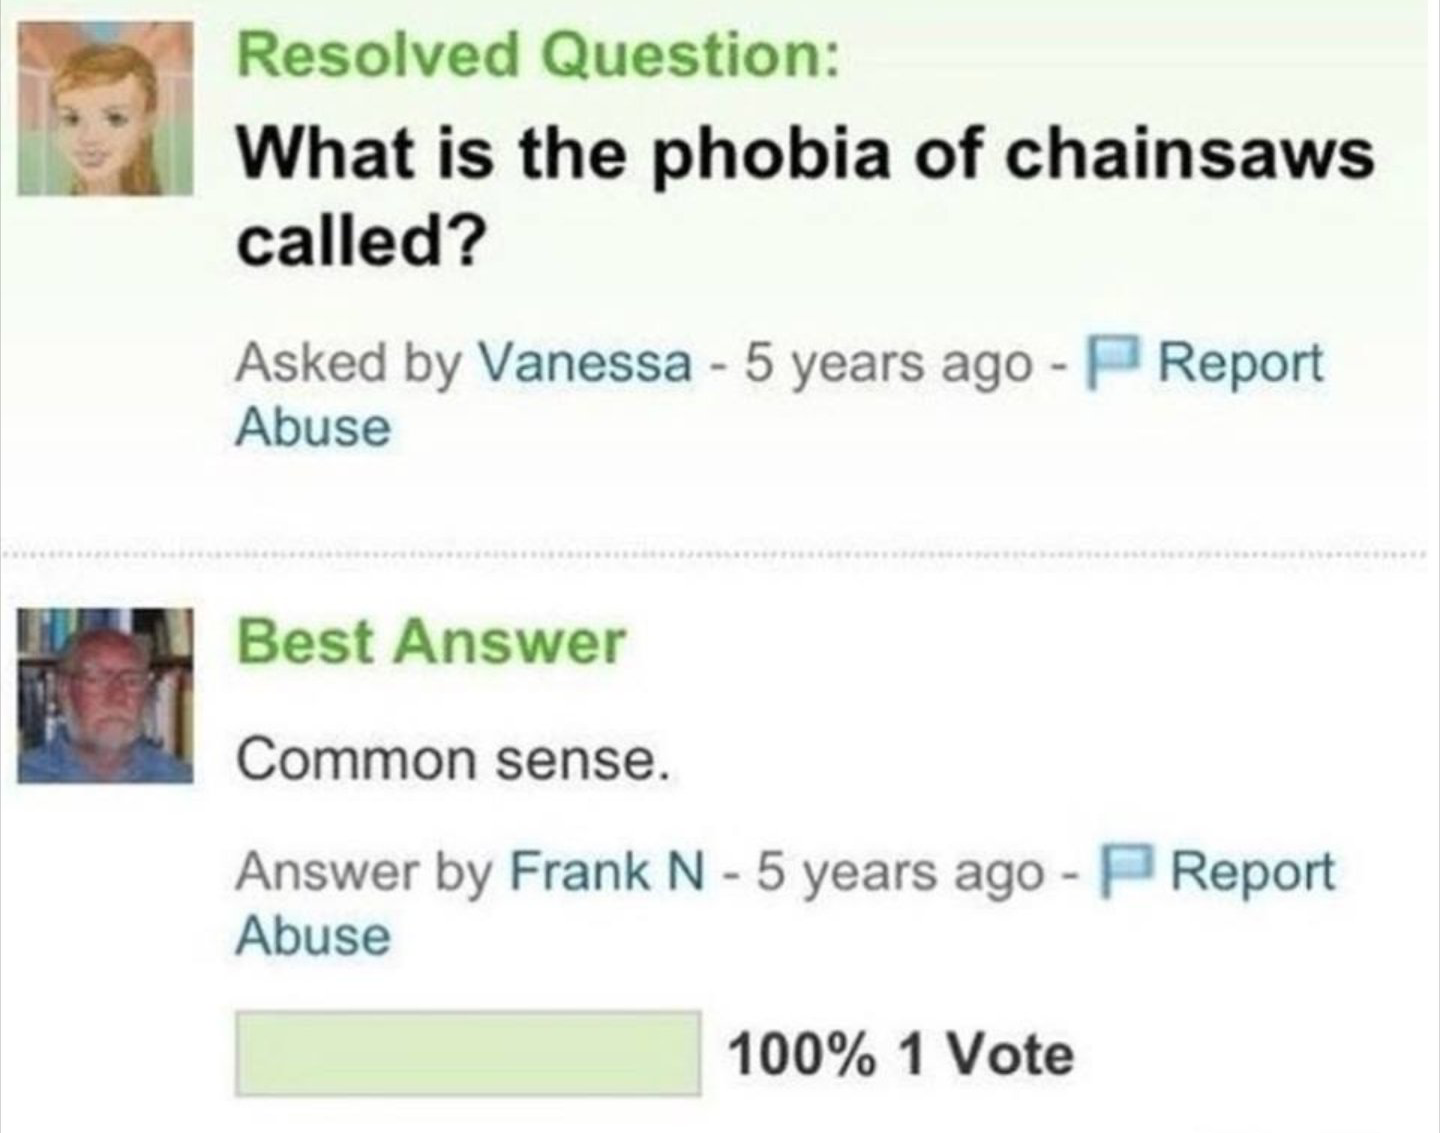 Frank is a genius